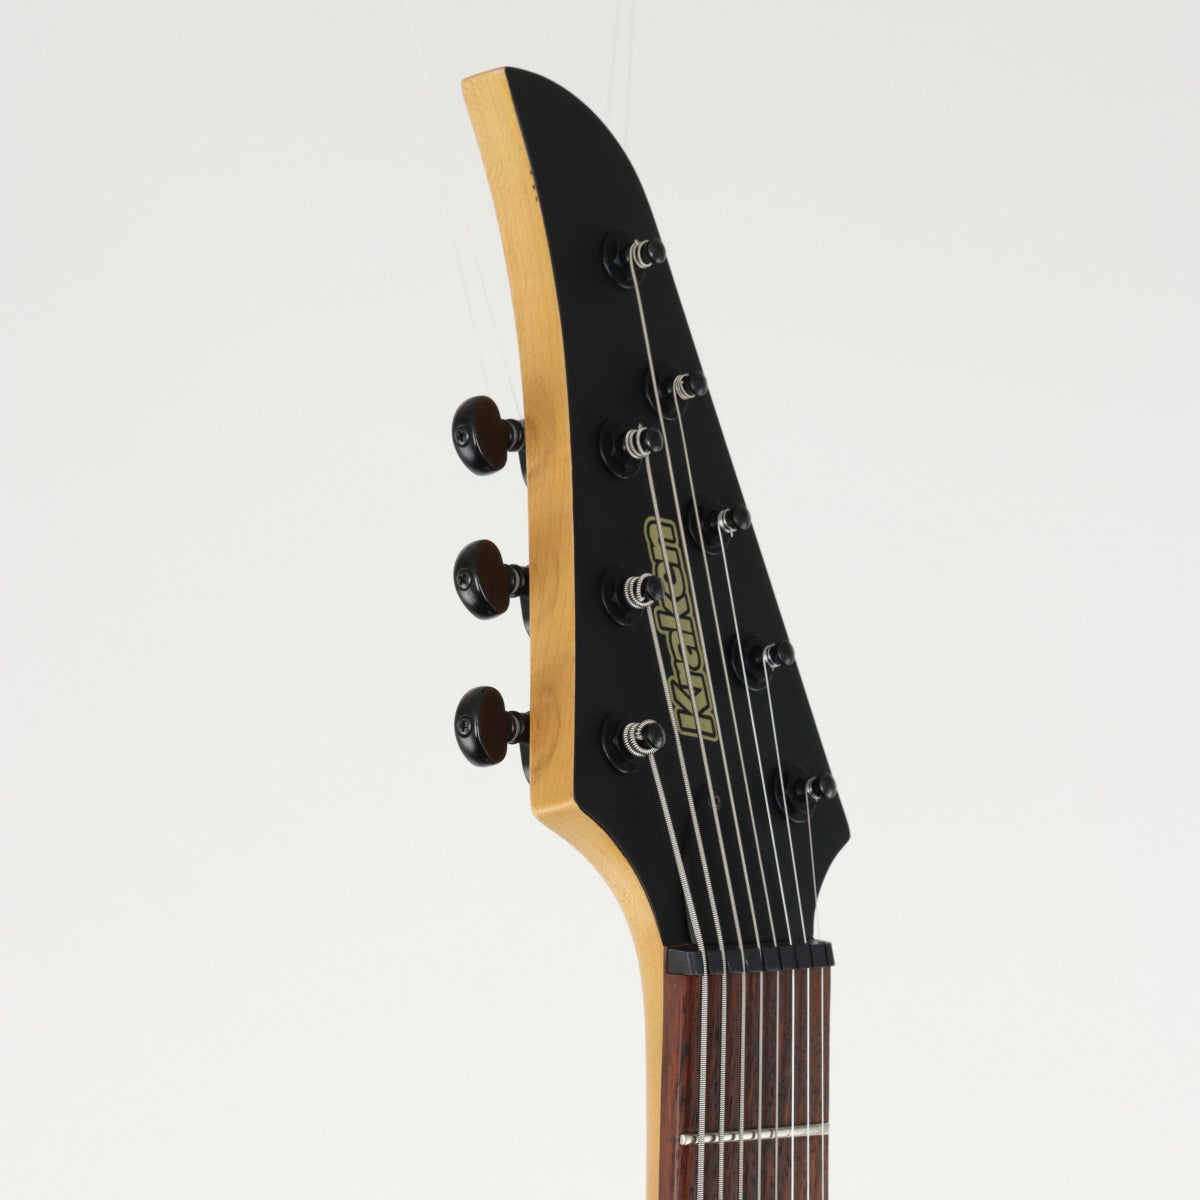 [SN 20124928] USED Kraken Guitar / Octa RF 8 Black [11]